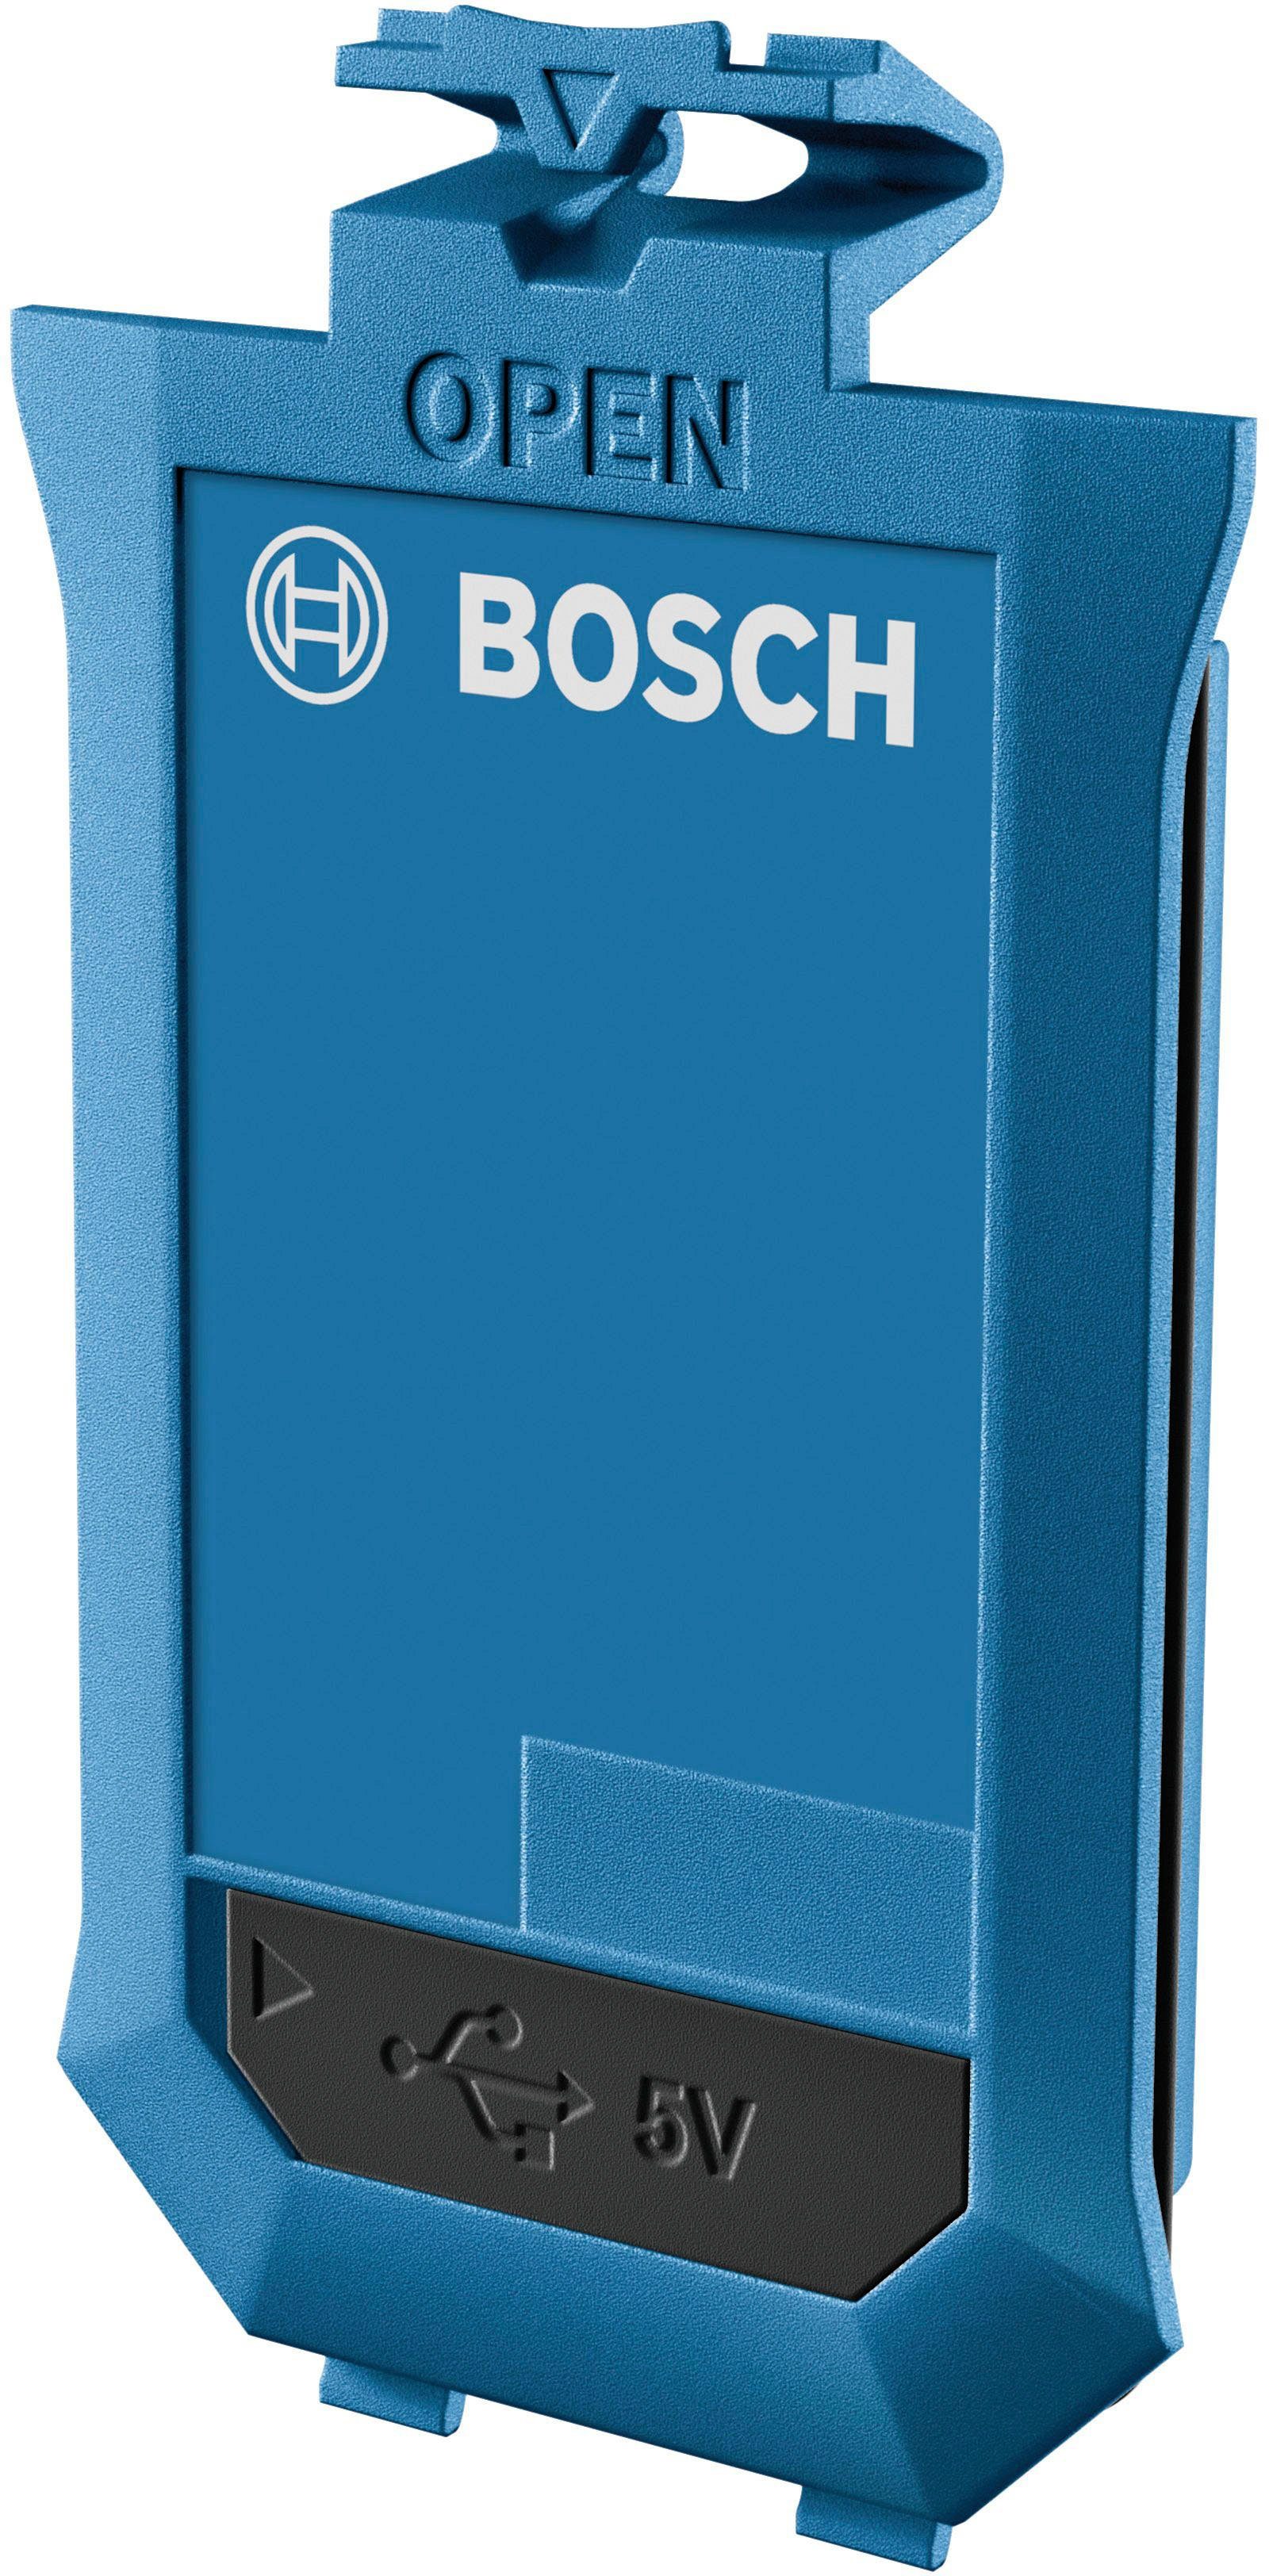 mit 3.7V BA (1 Kompatibel Laser-Entfernungsmessern Akku St), Professional BOSCH Bosch 1.0Ah